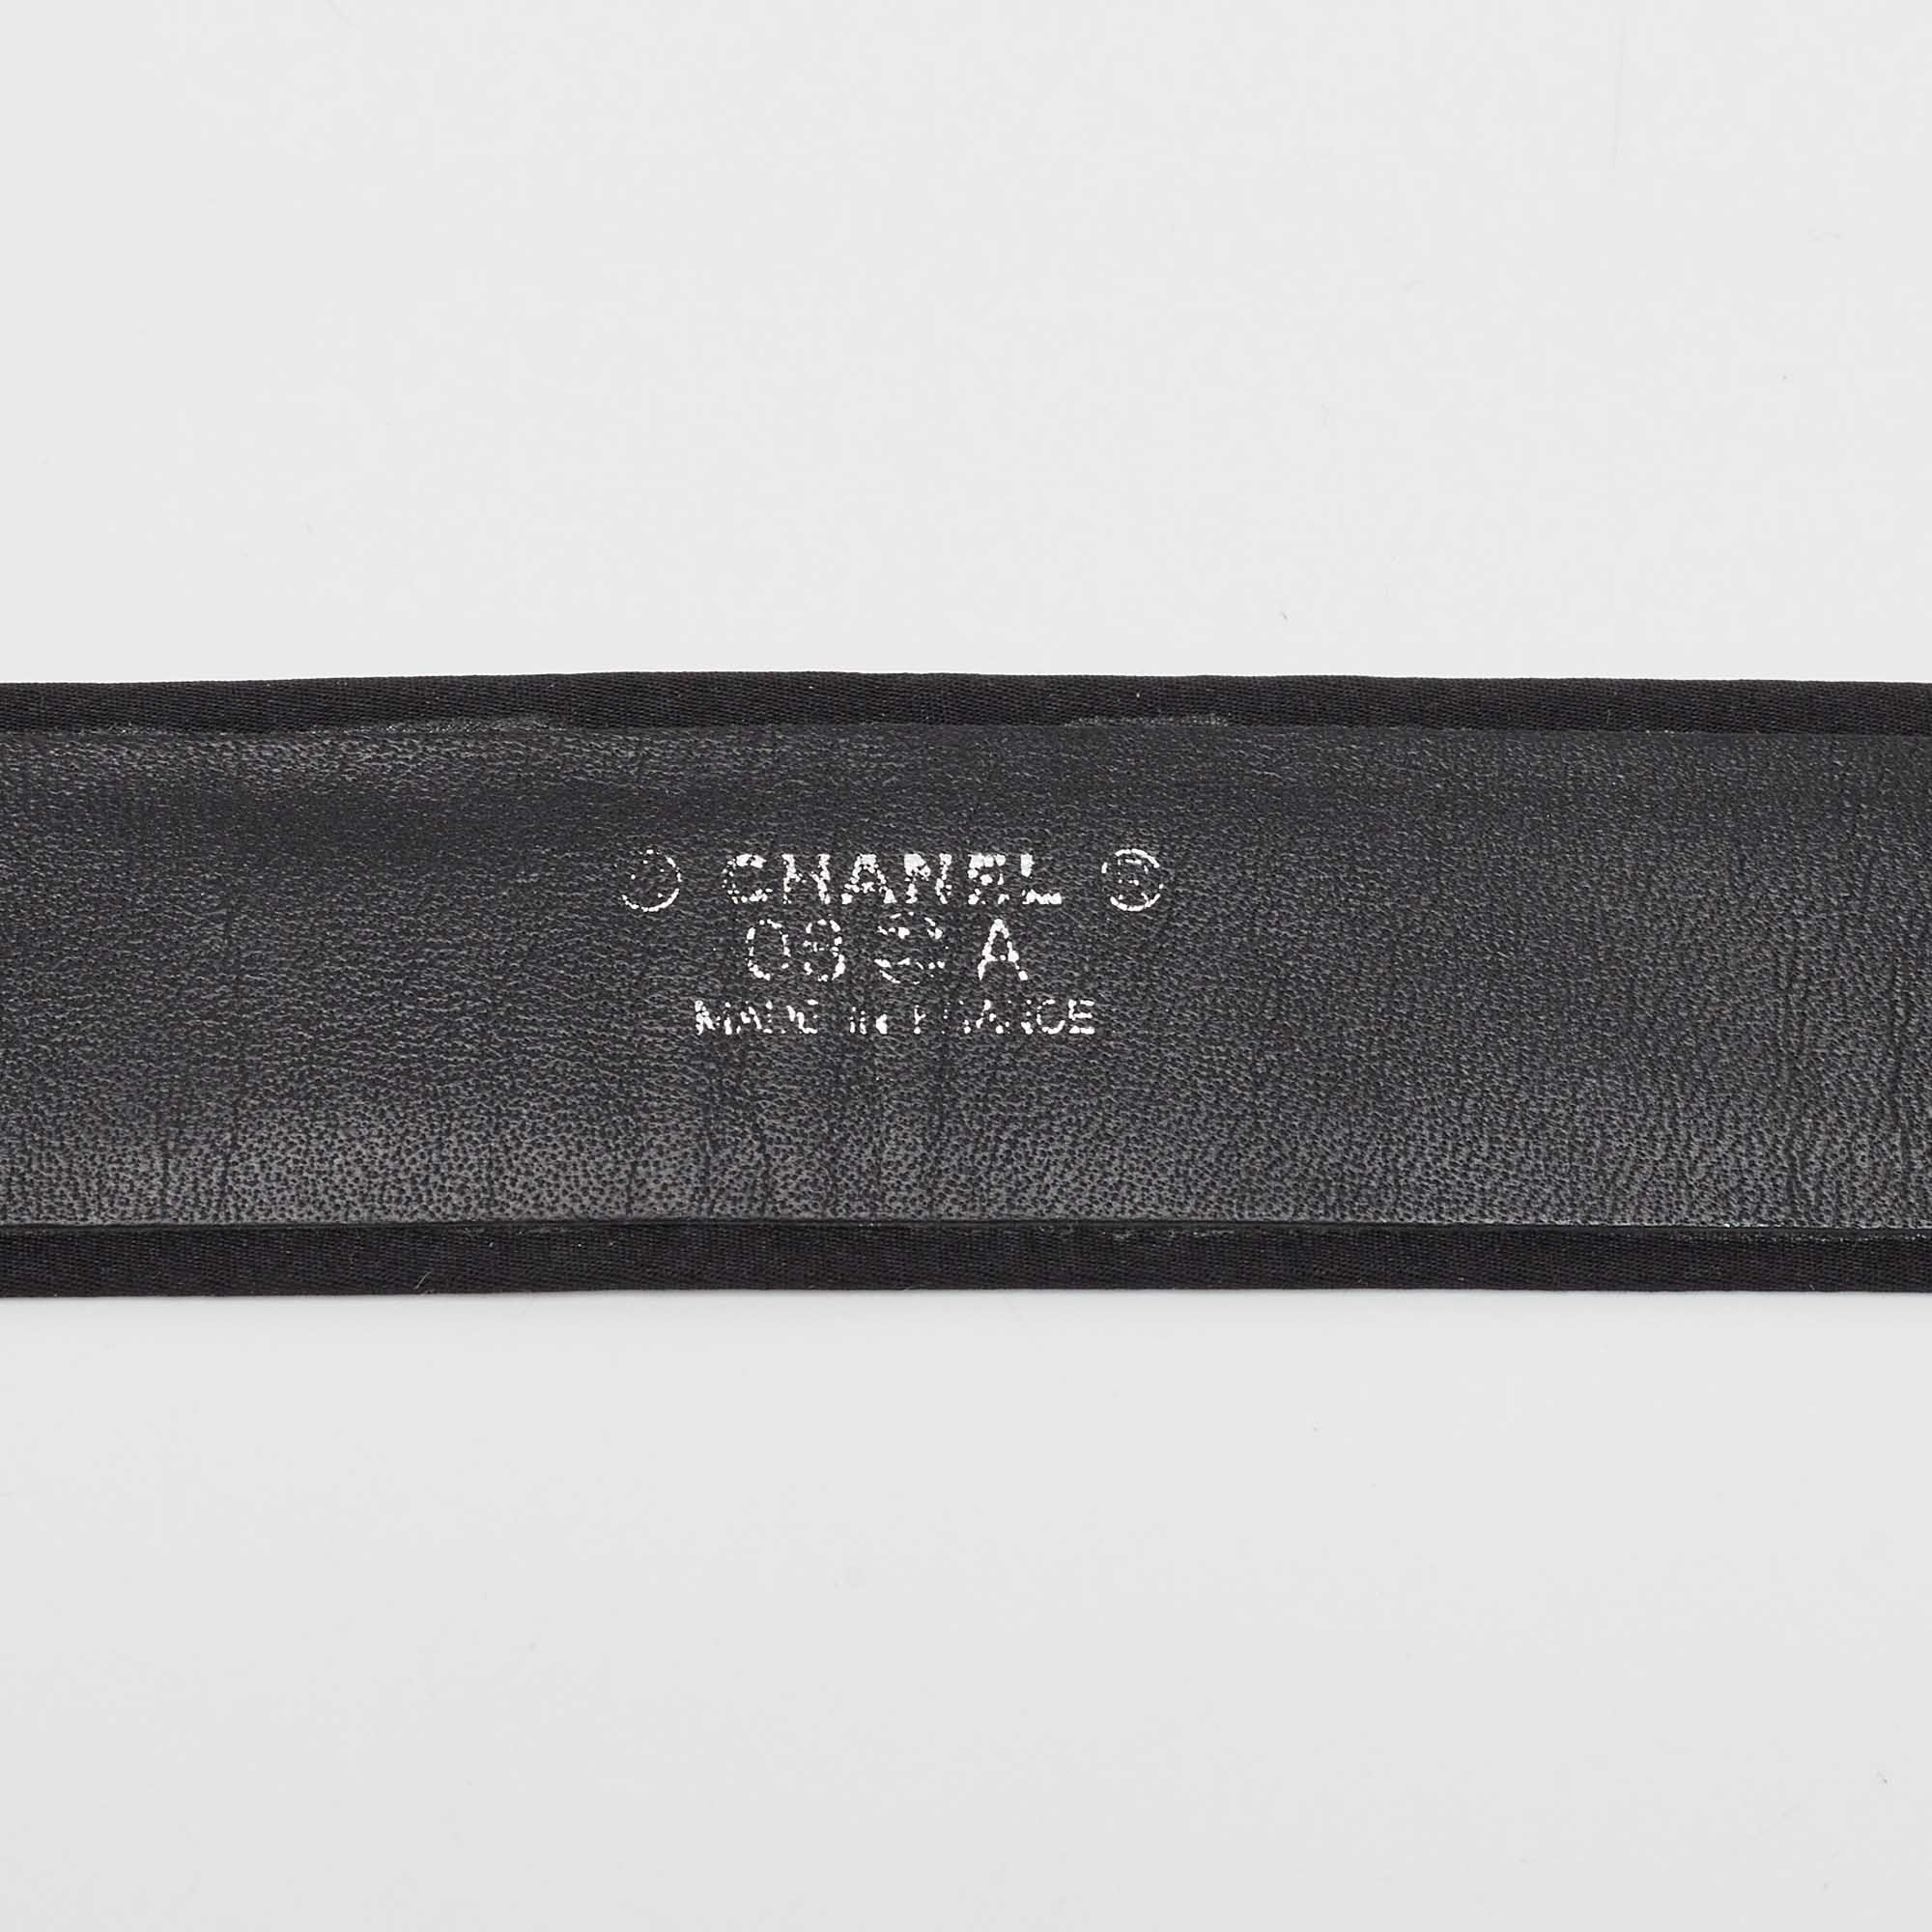 Chanel Black Satin Buckle Belt 75 CM